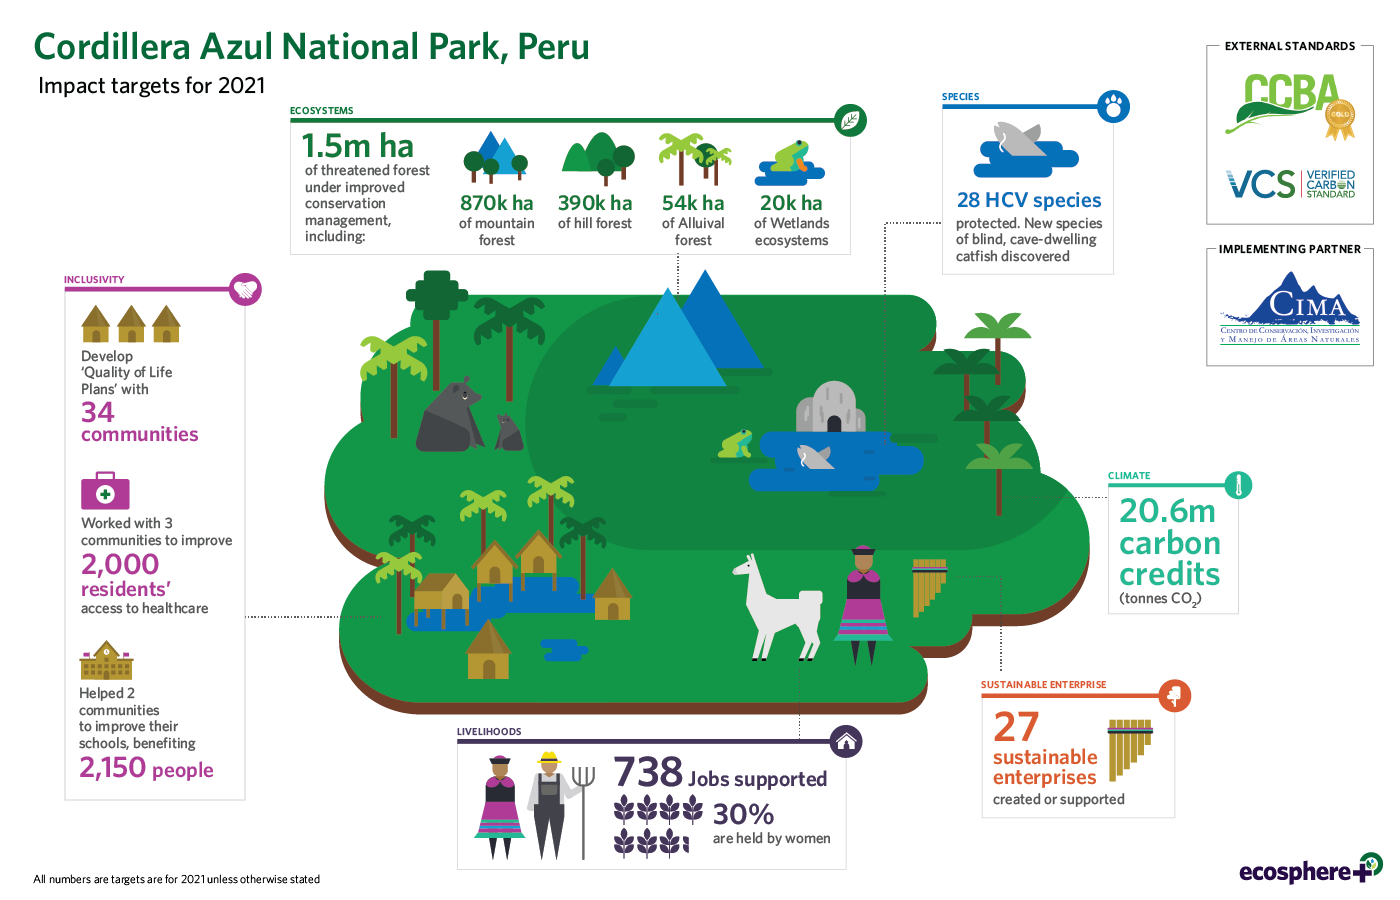 Cordillera Azul National Park Project Update